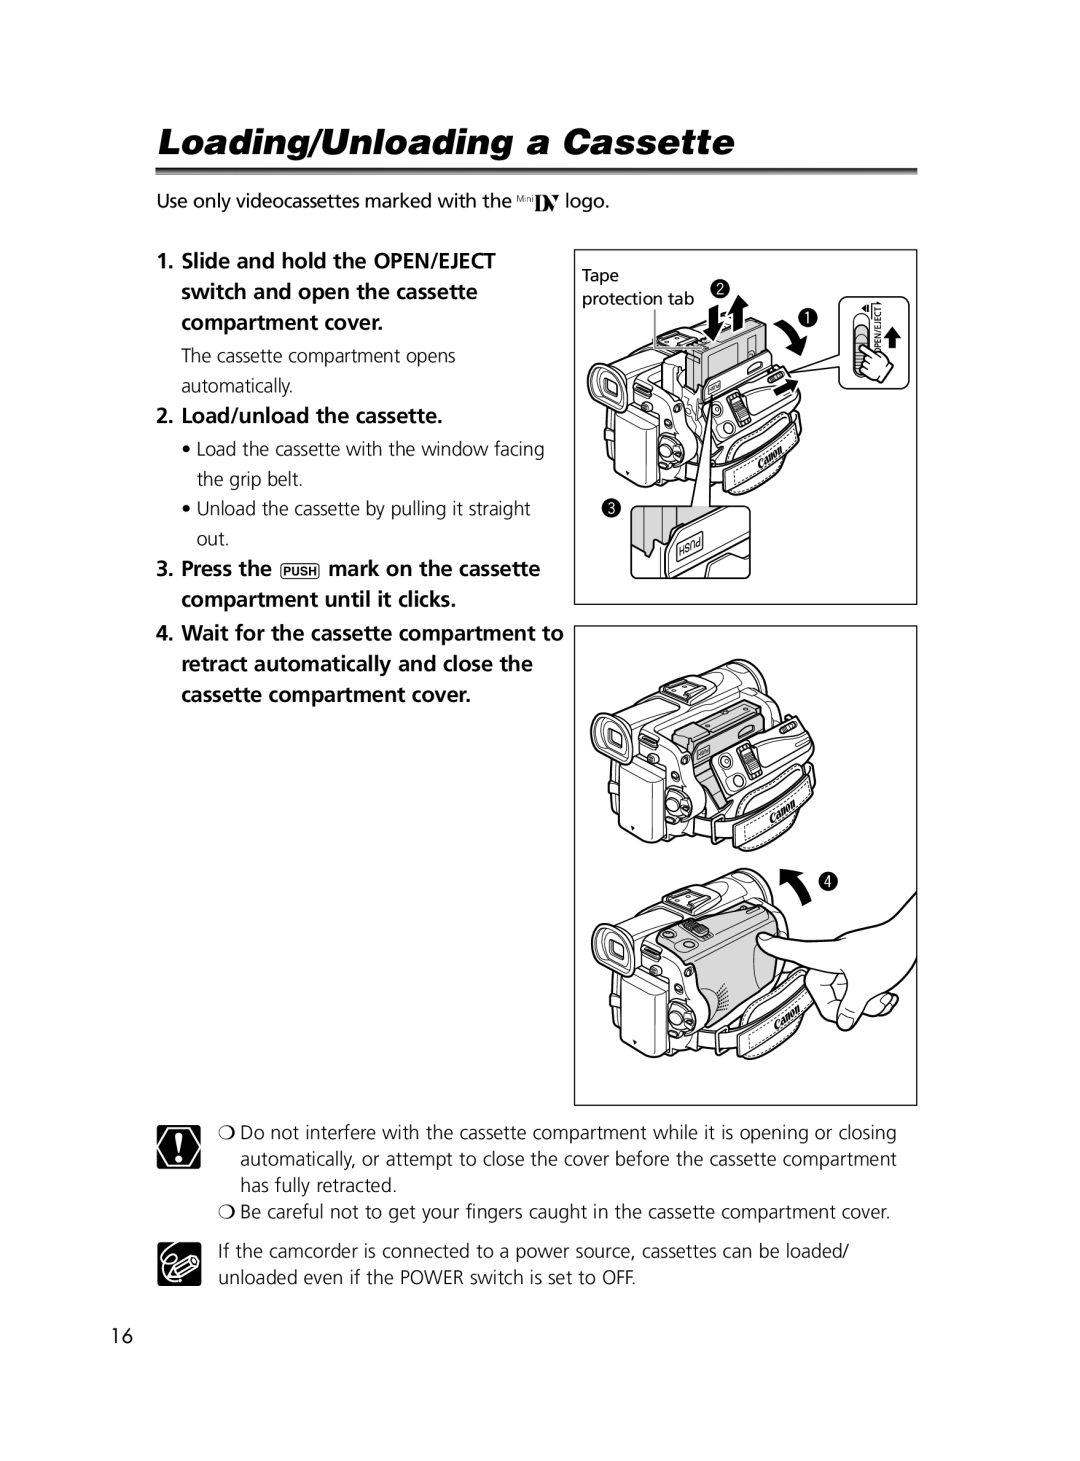 Canon 60, 65 instruction manual Loading/Unloading a Cassette, Load/unload the cassette 